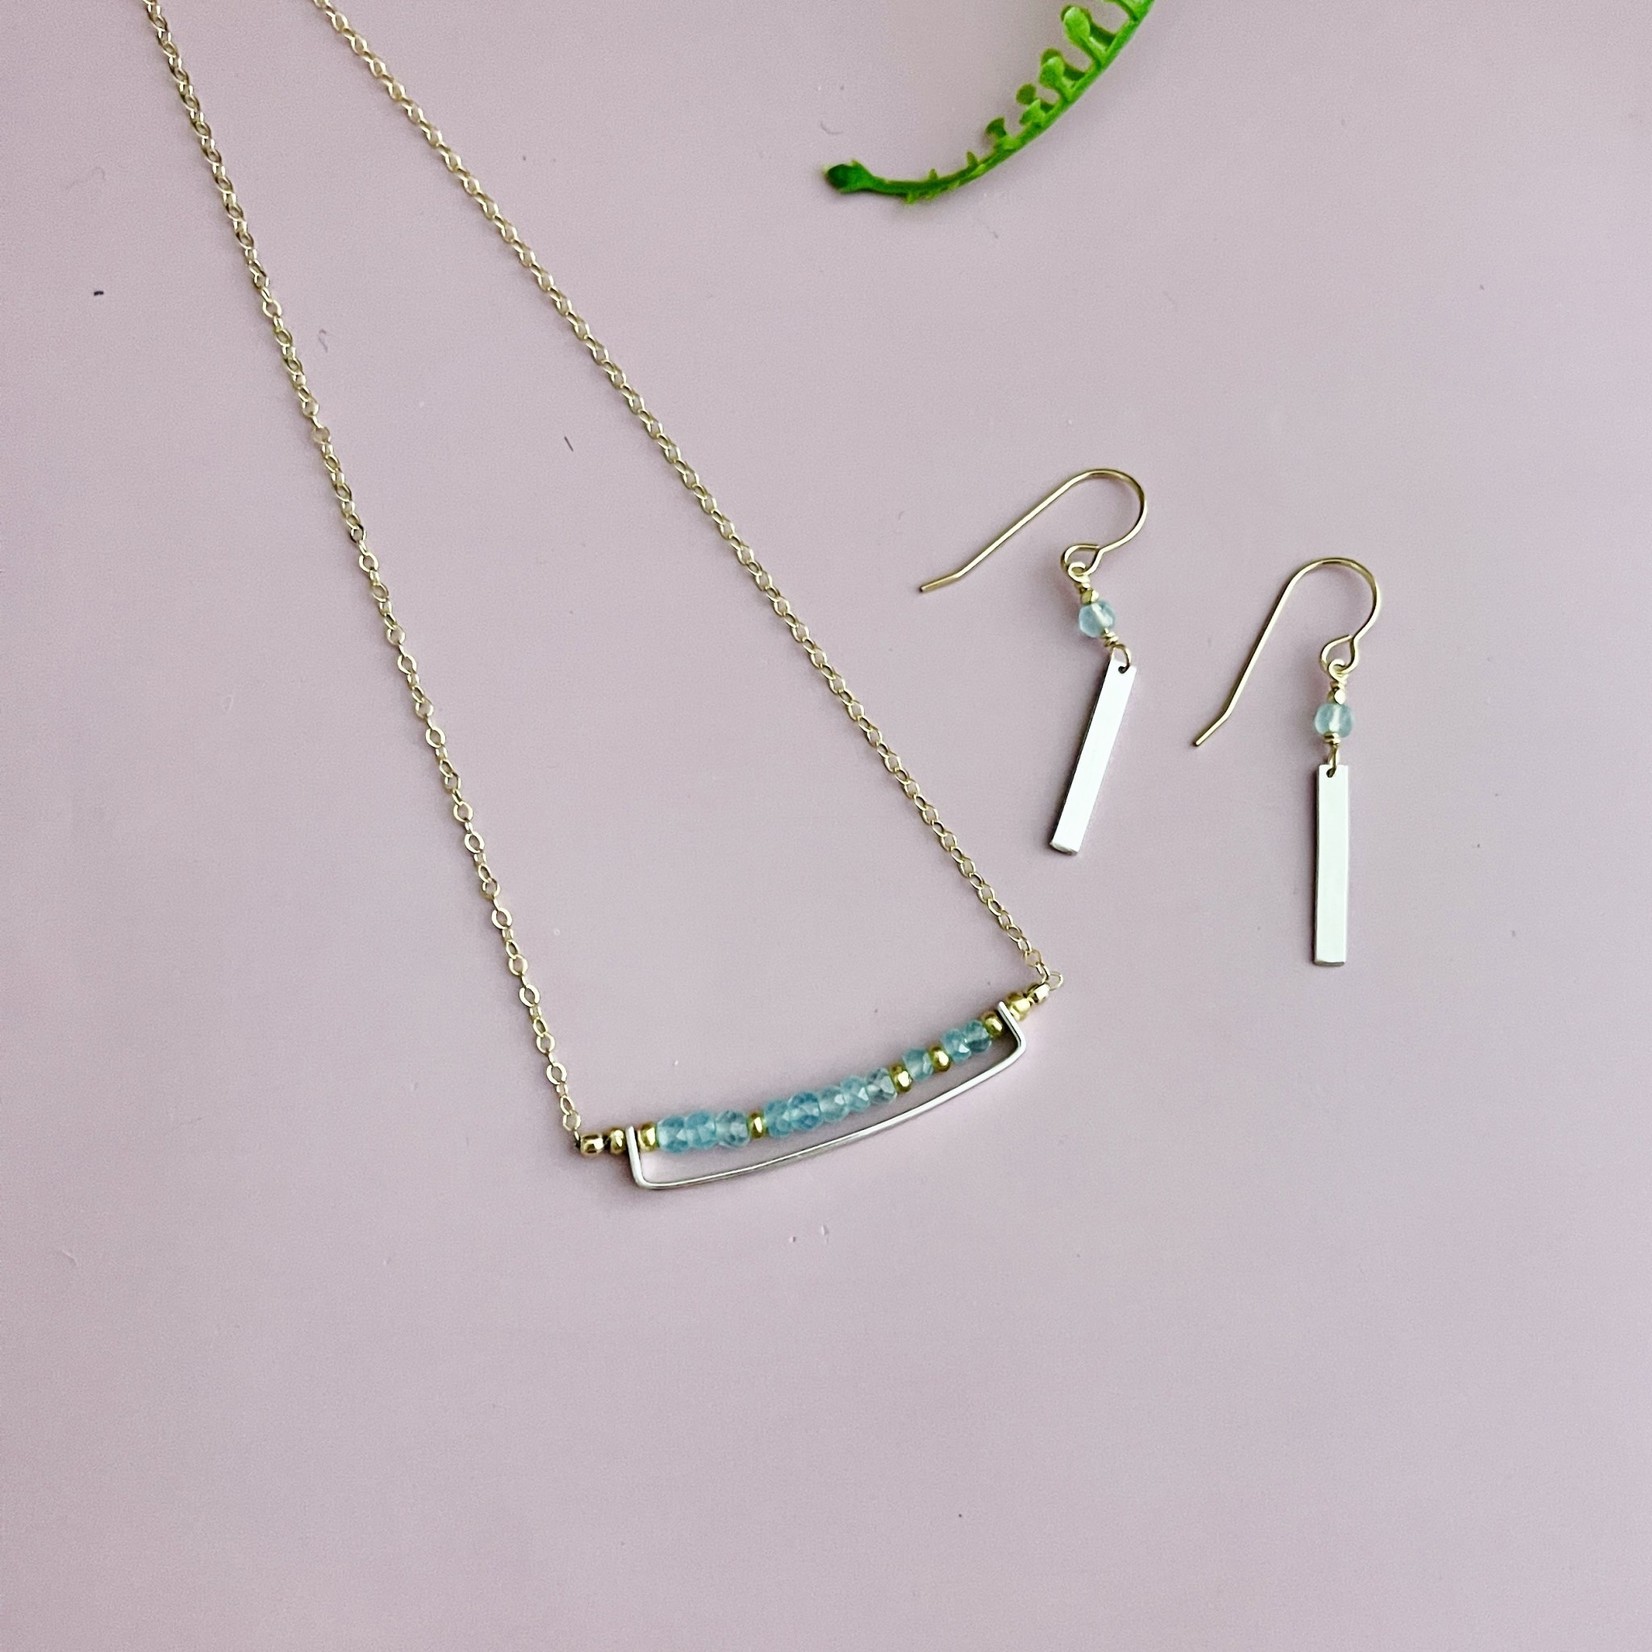 J&I Handmade Aqua chalcedony, double sterling curve, gf chain necklace. 16"L